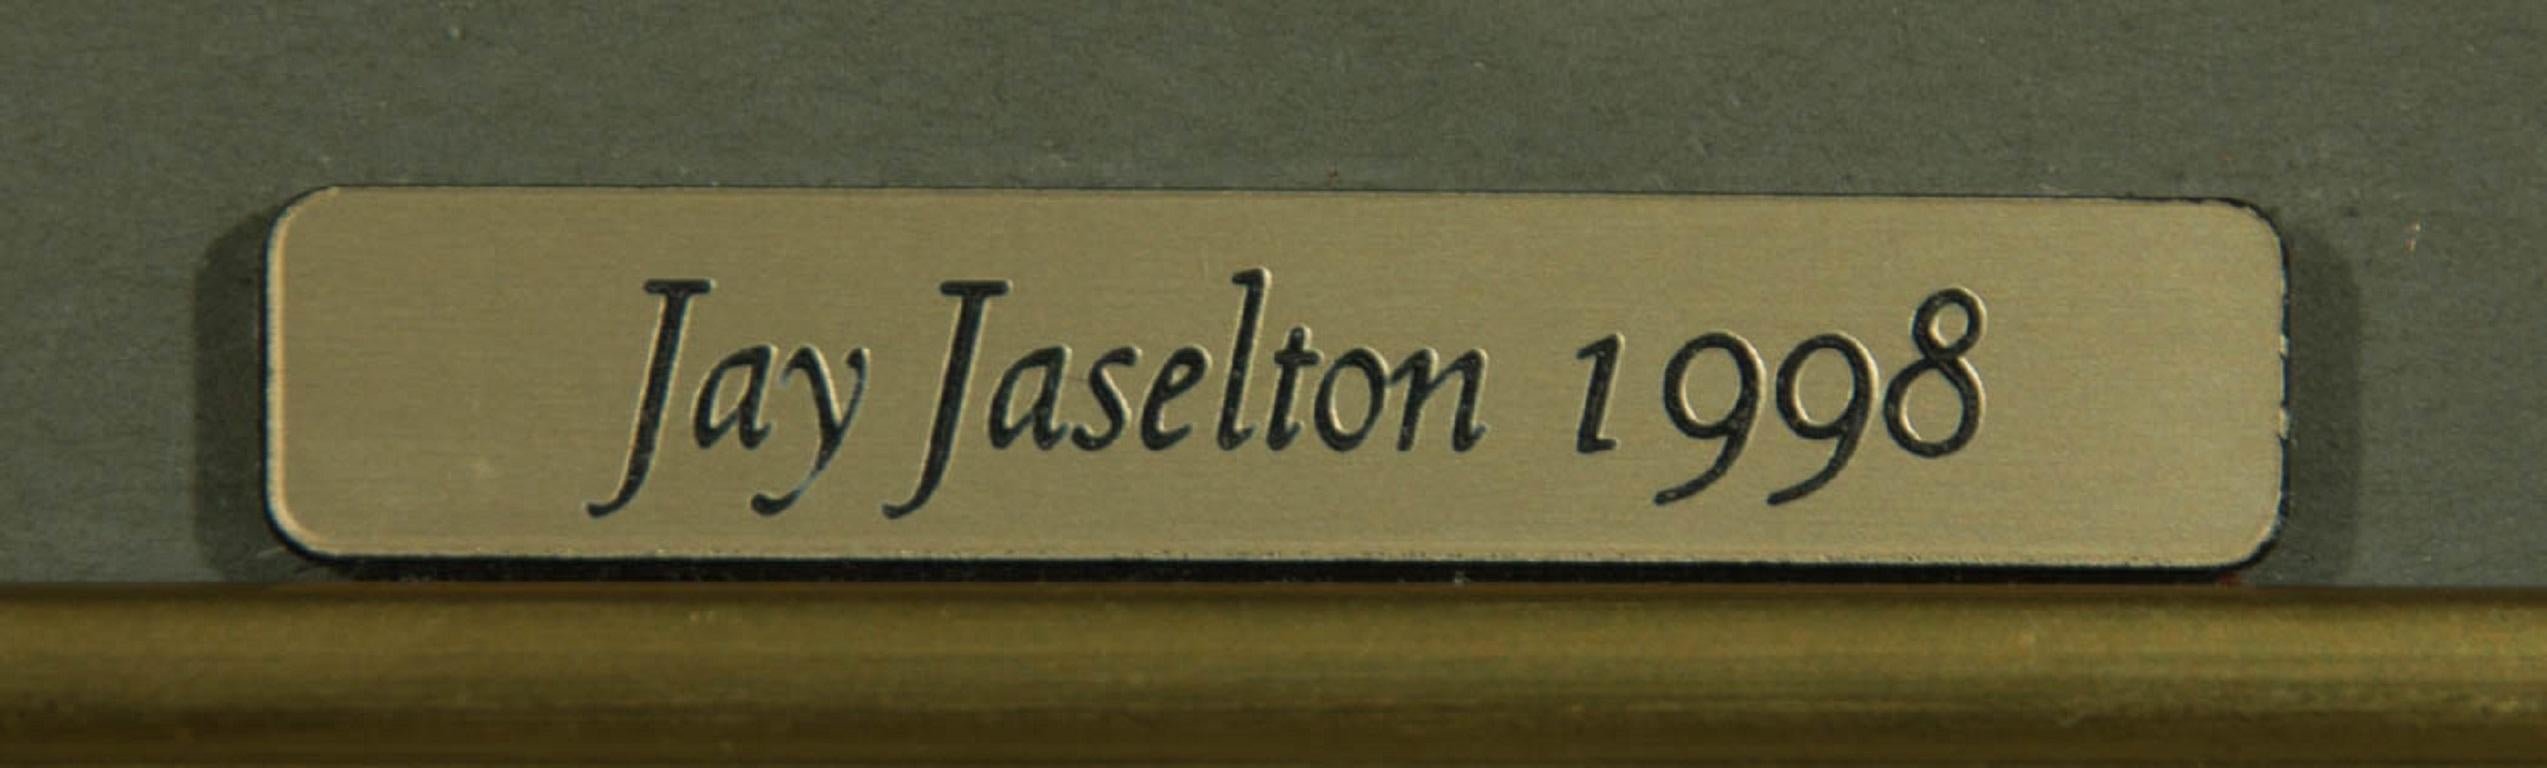 Jay Jaselton - 1998 Pastel, deux terriers en vente 4